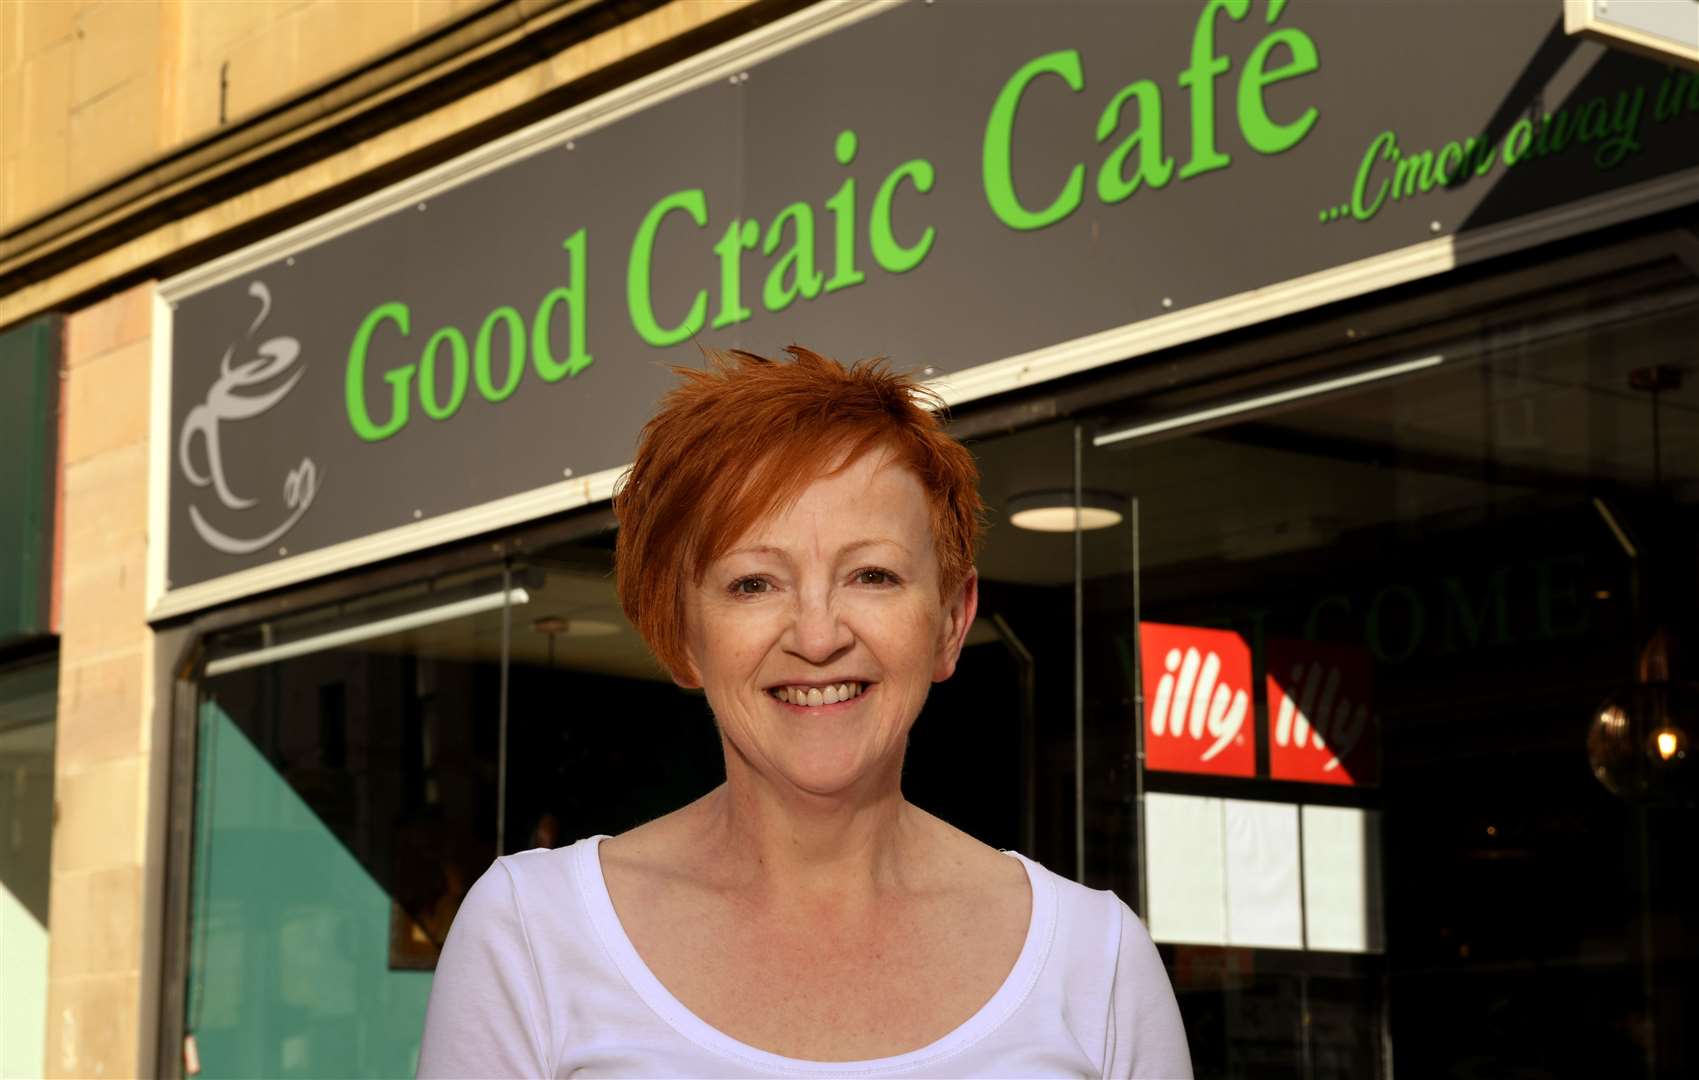 Jackie McIntosh, owner of Good Craic Café. Picture: James Mackenzie